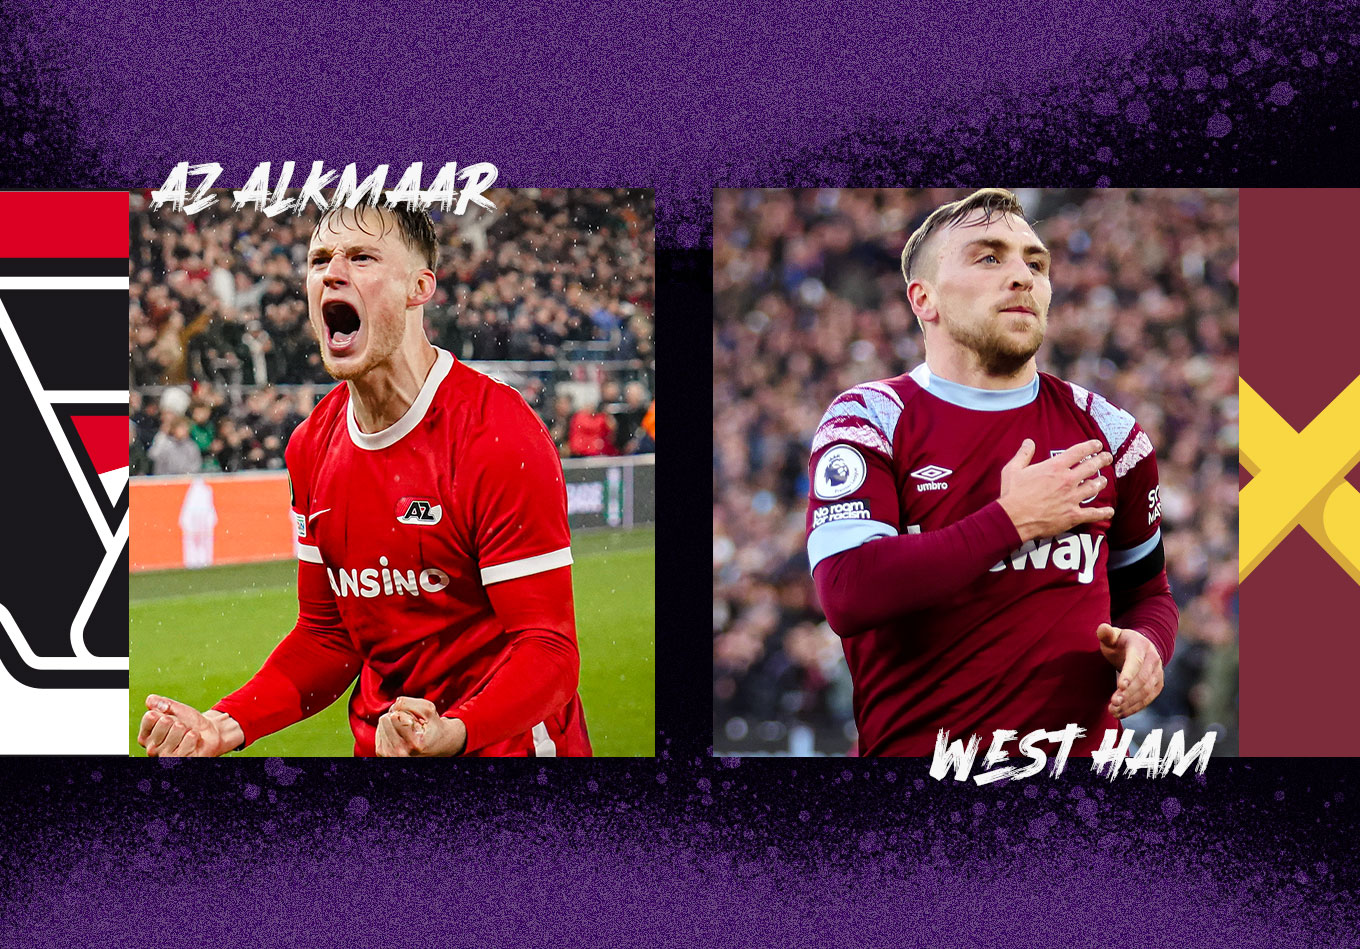 AZ Alkmaar vs West Ham: Prediction and Preview